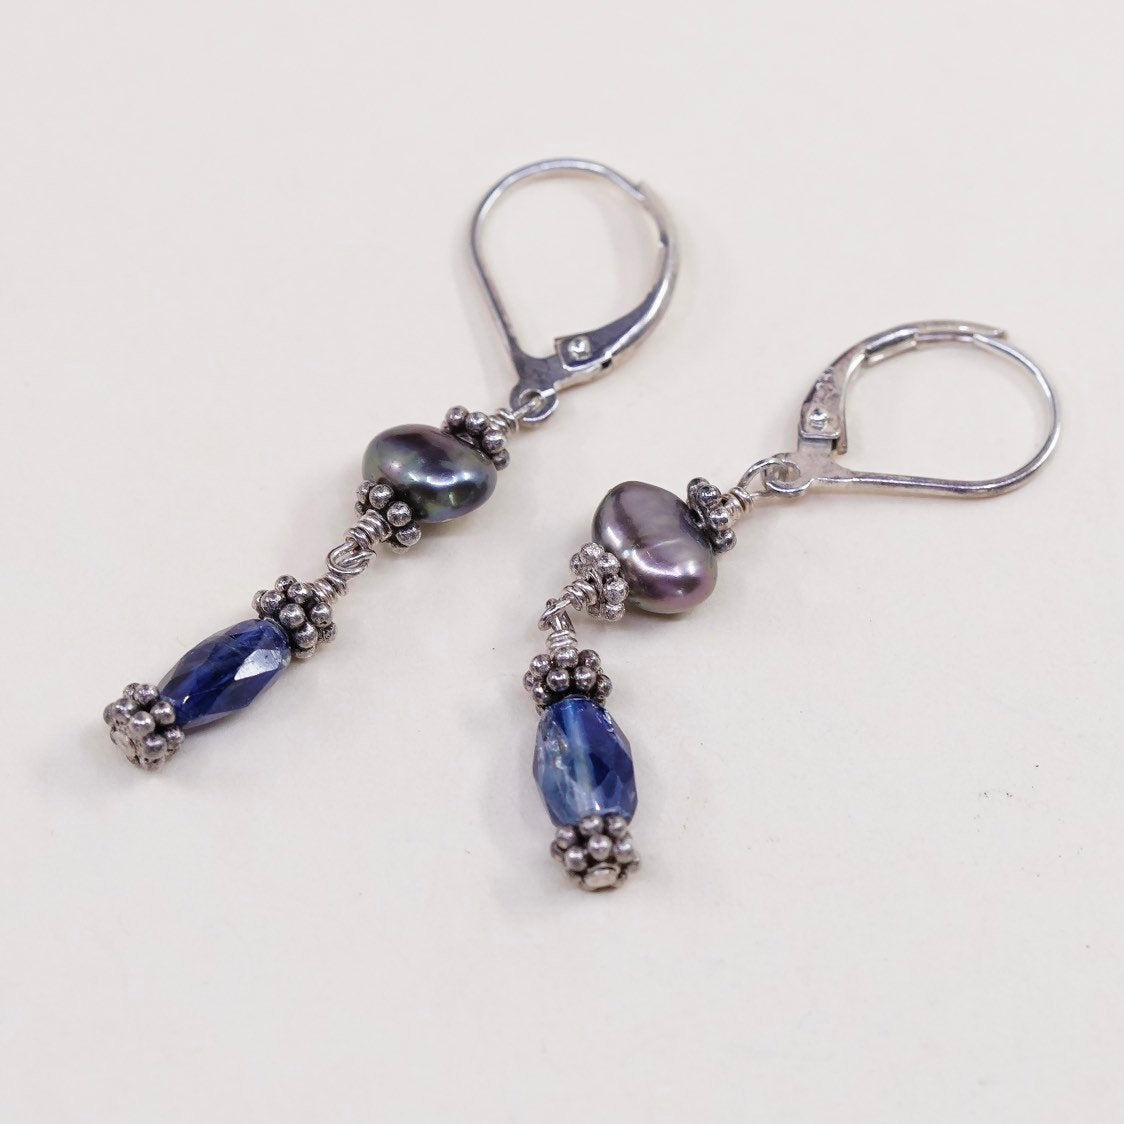 vtg Sterling silver handmade earrings, 925 silver with black pearl drops